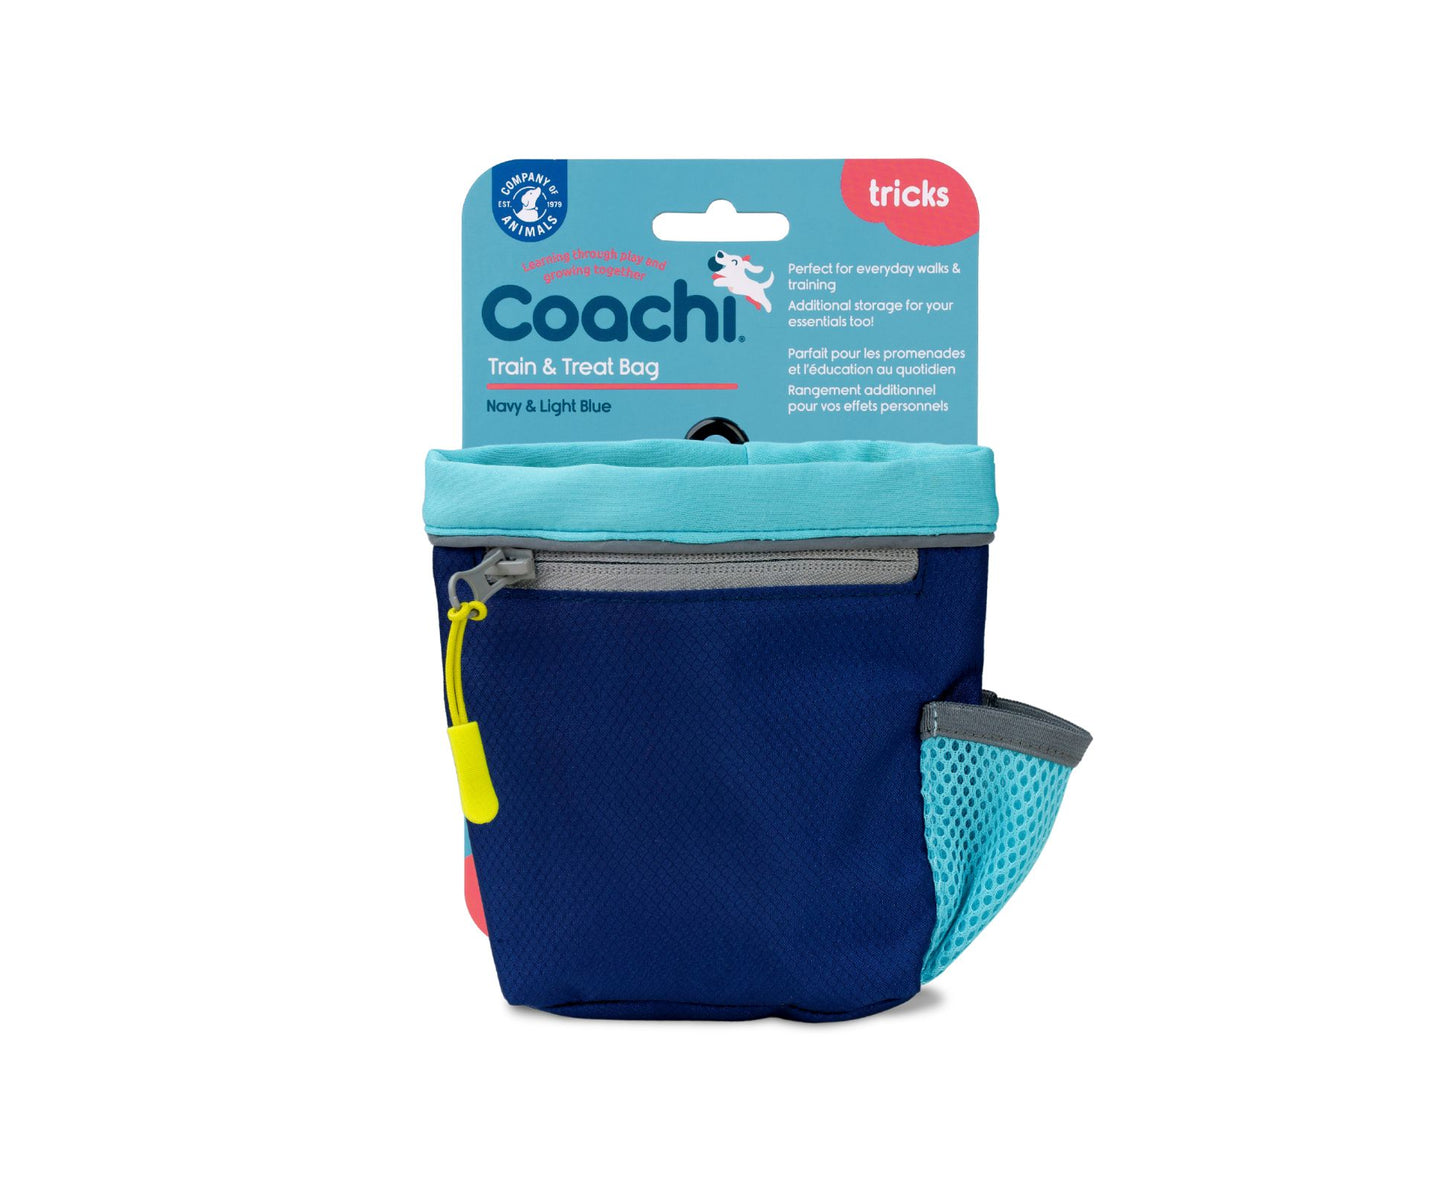 Coachi Train & Treat Bag Navy & Light Blue